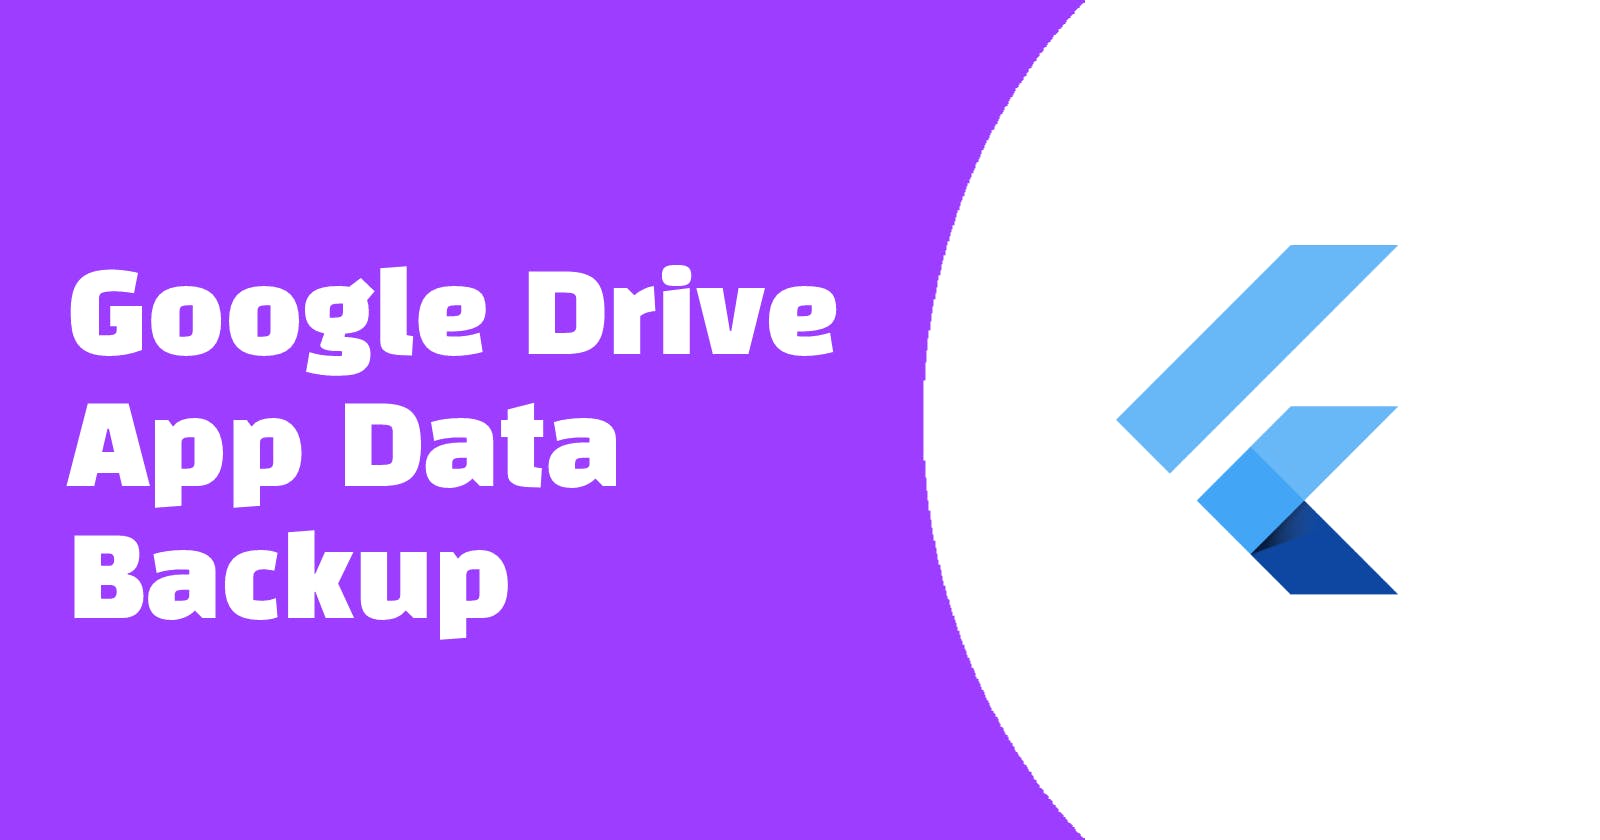 Google Drive App Data Backup